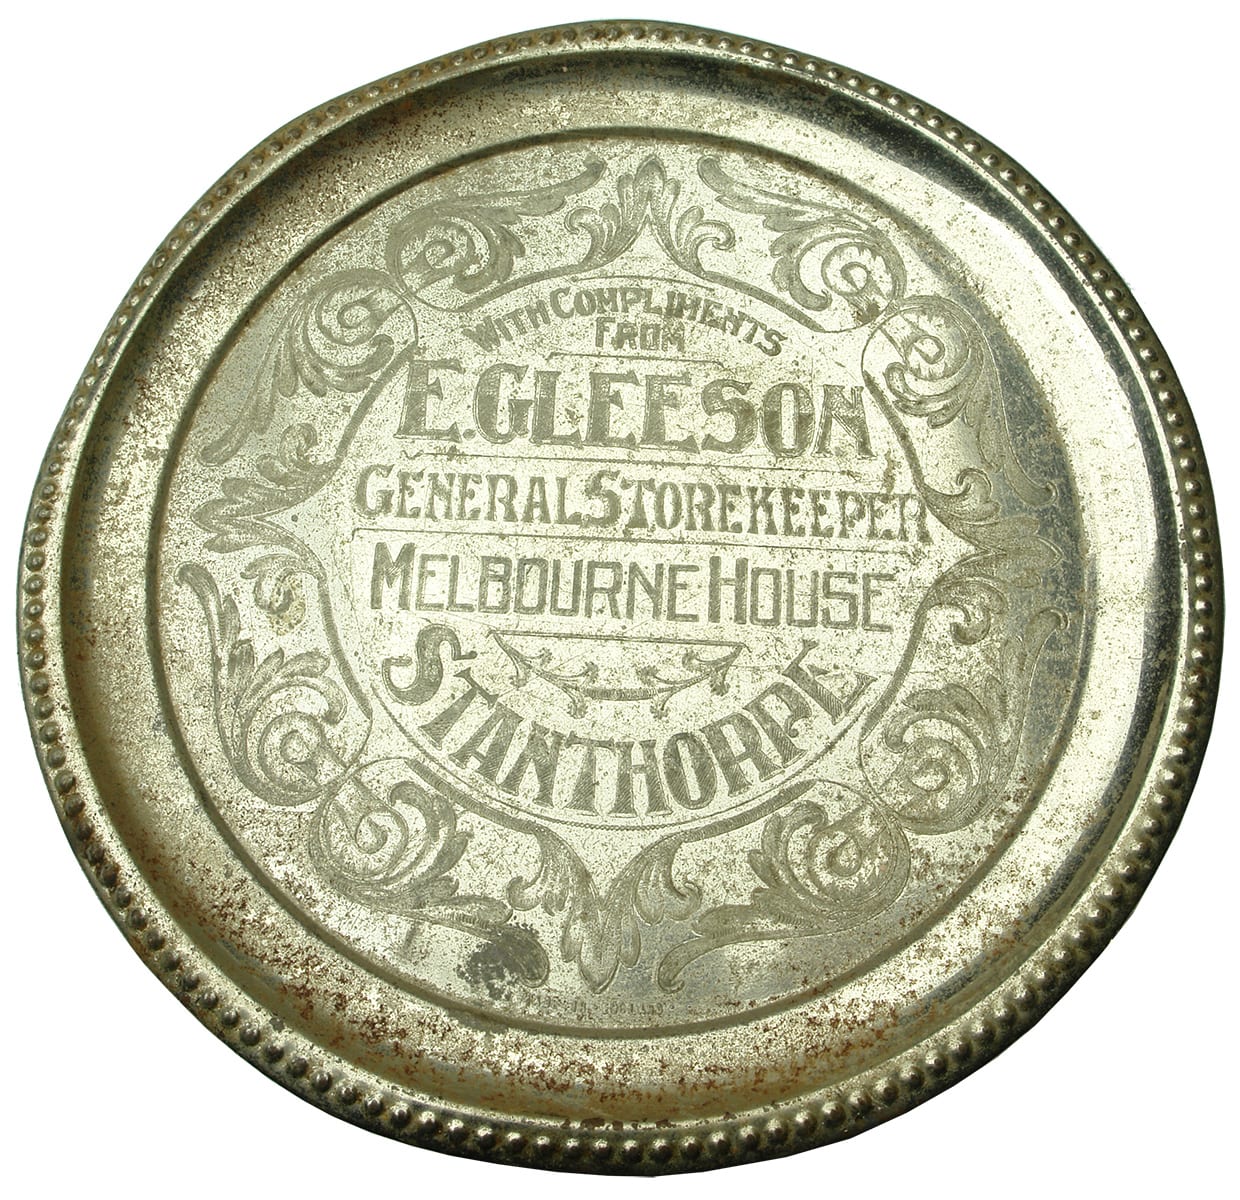 Gleeson Storekeeper Melbourne House Stanthorpe Serving Tray